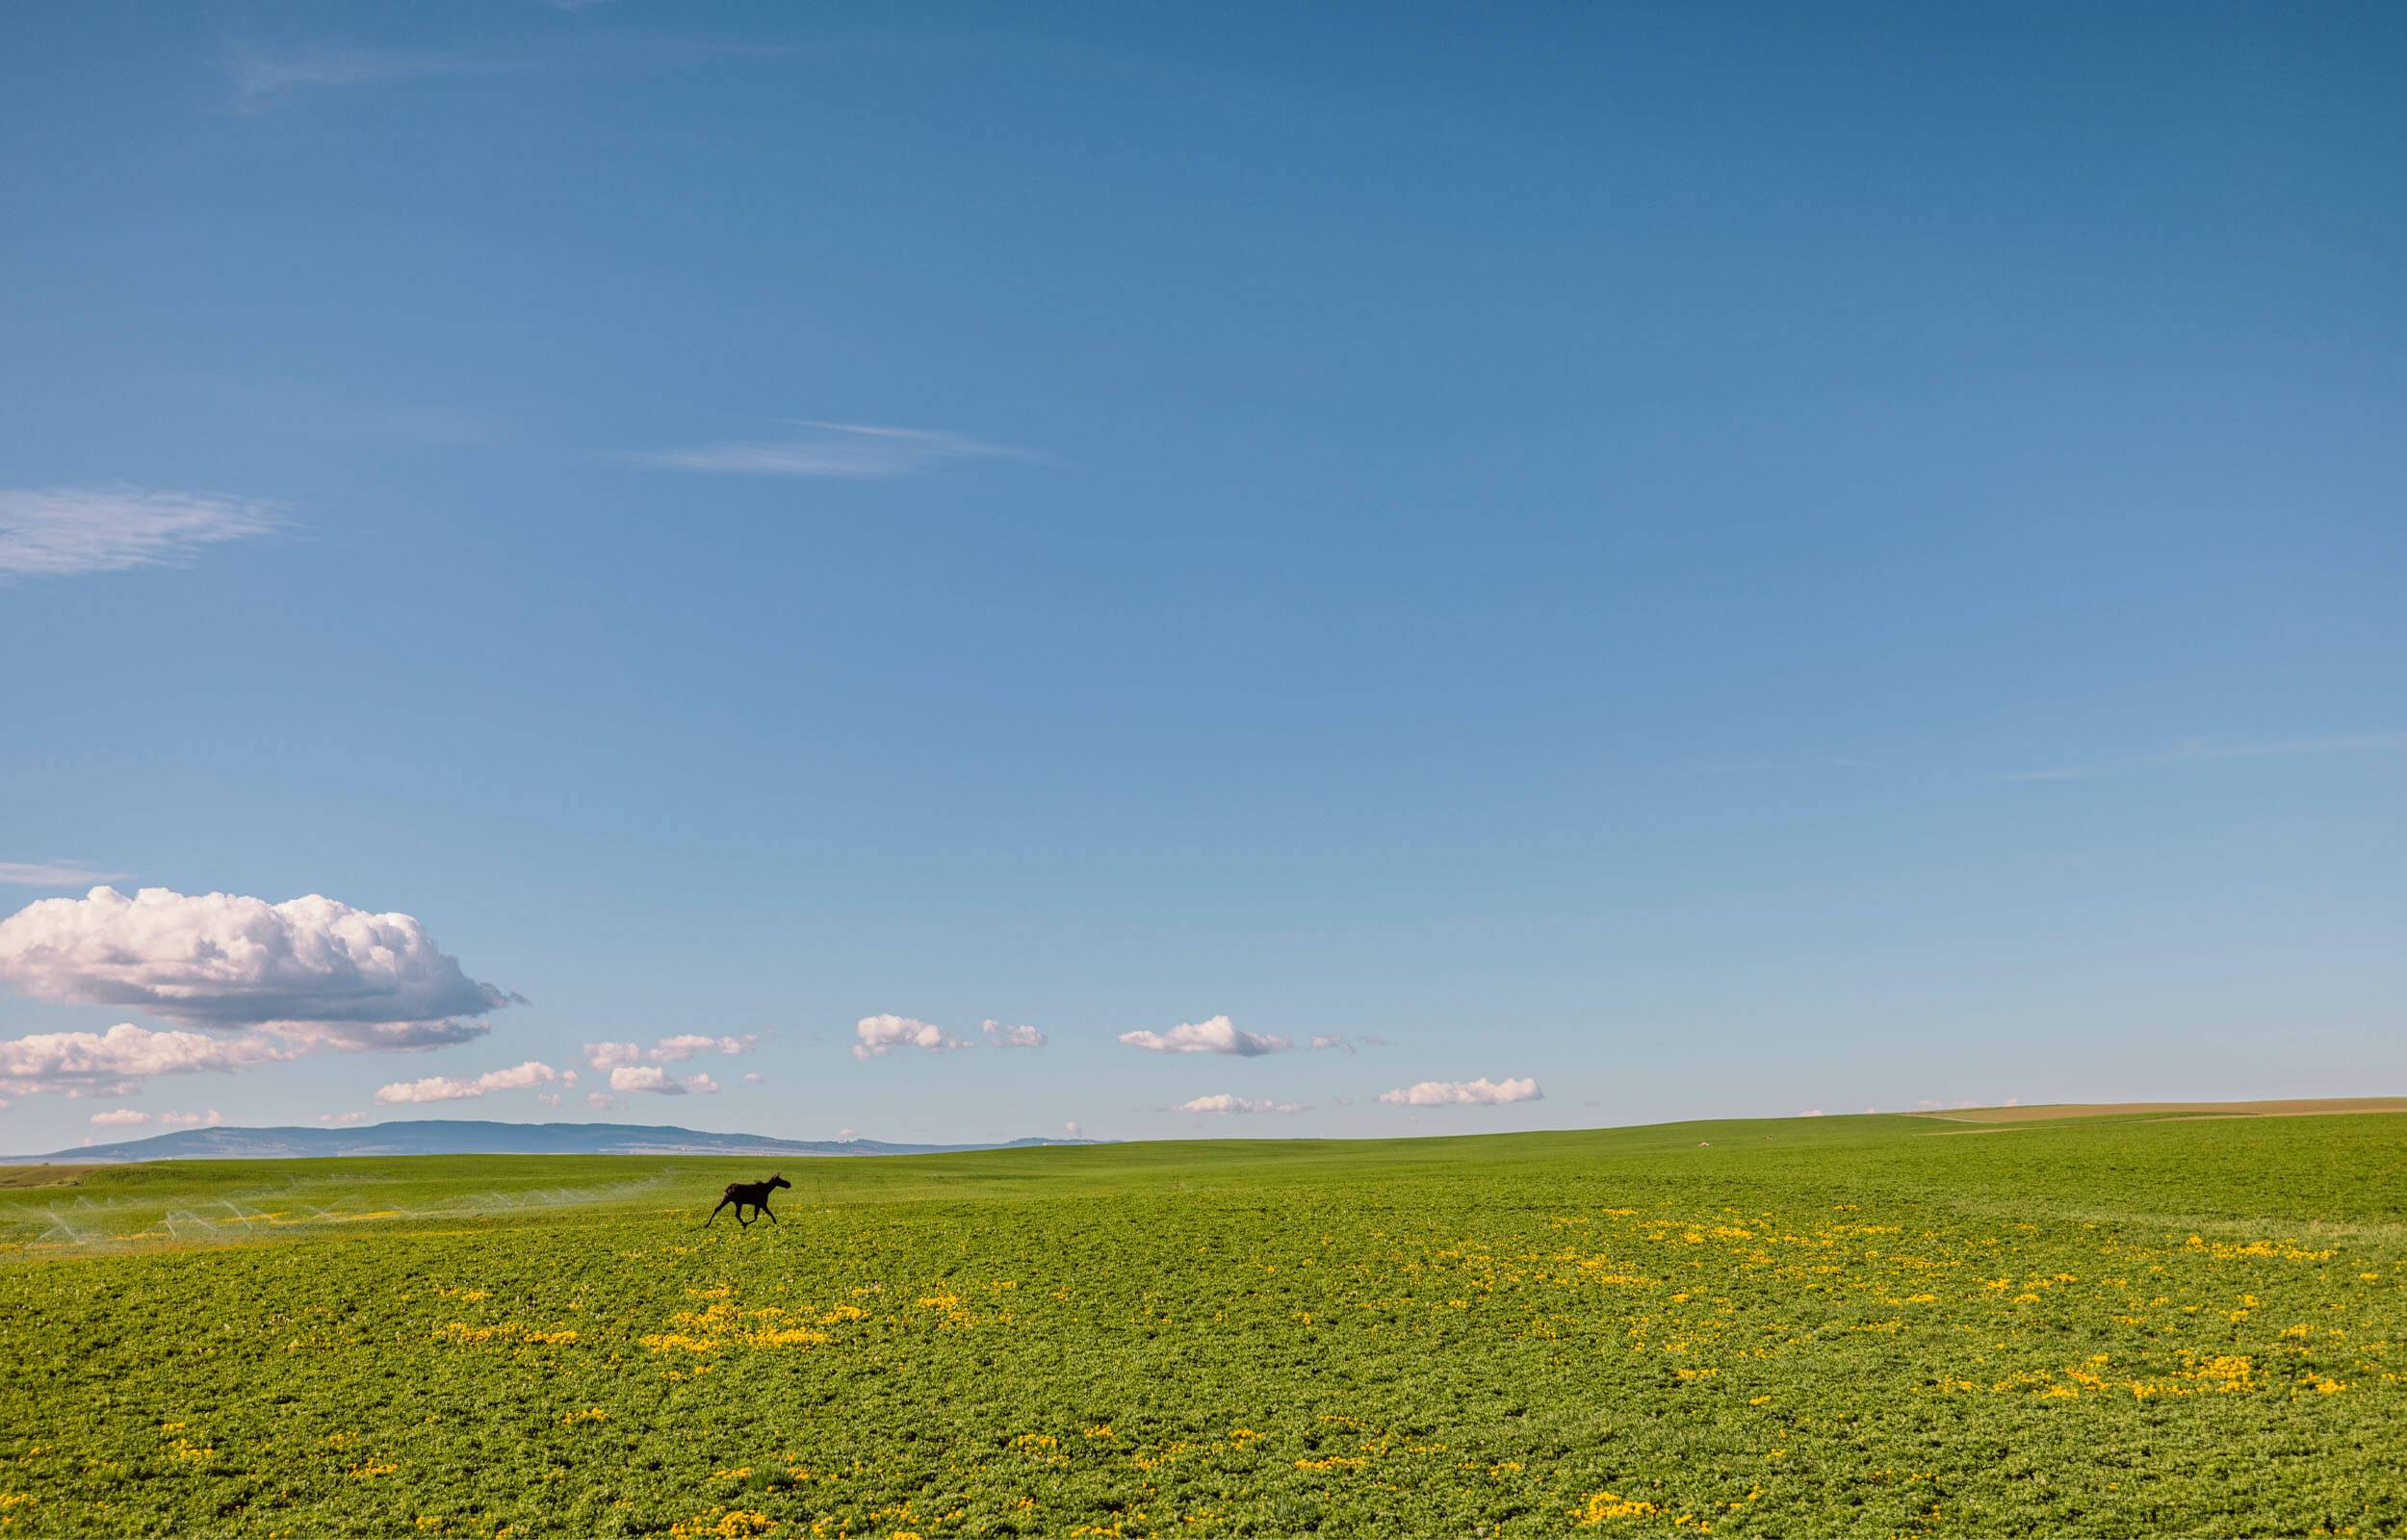 A moose in the distance runs through a field.